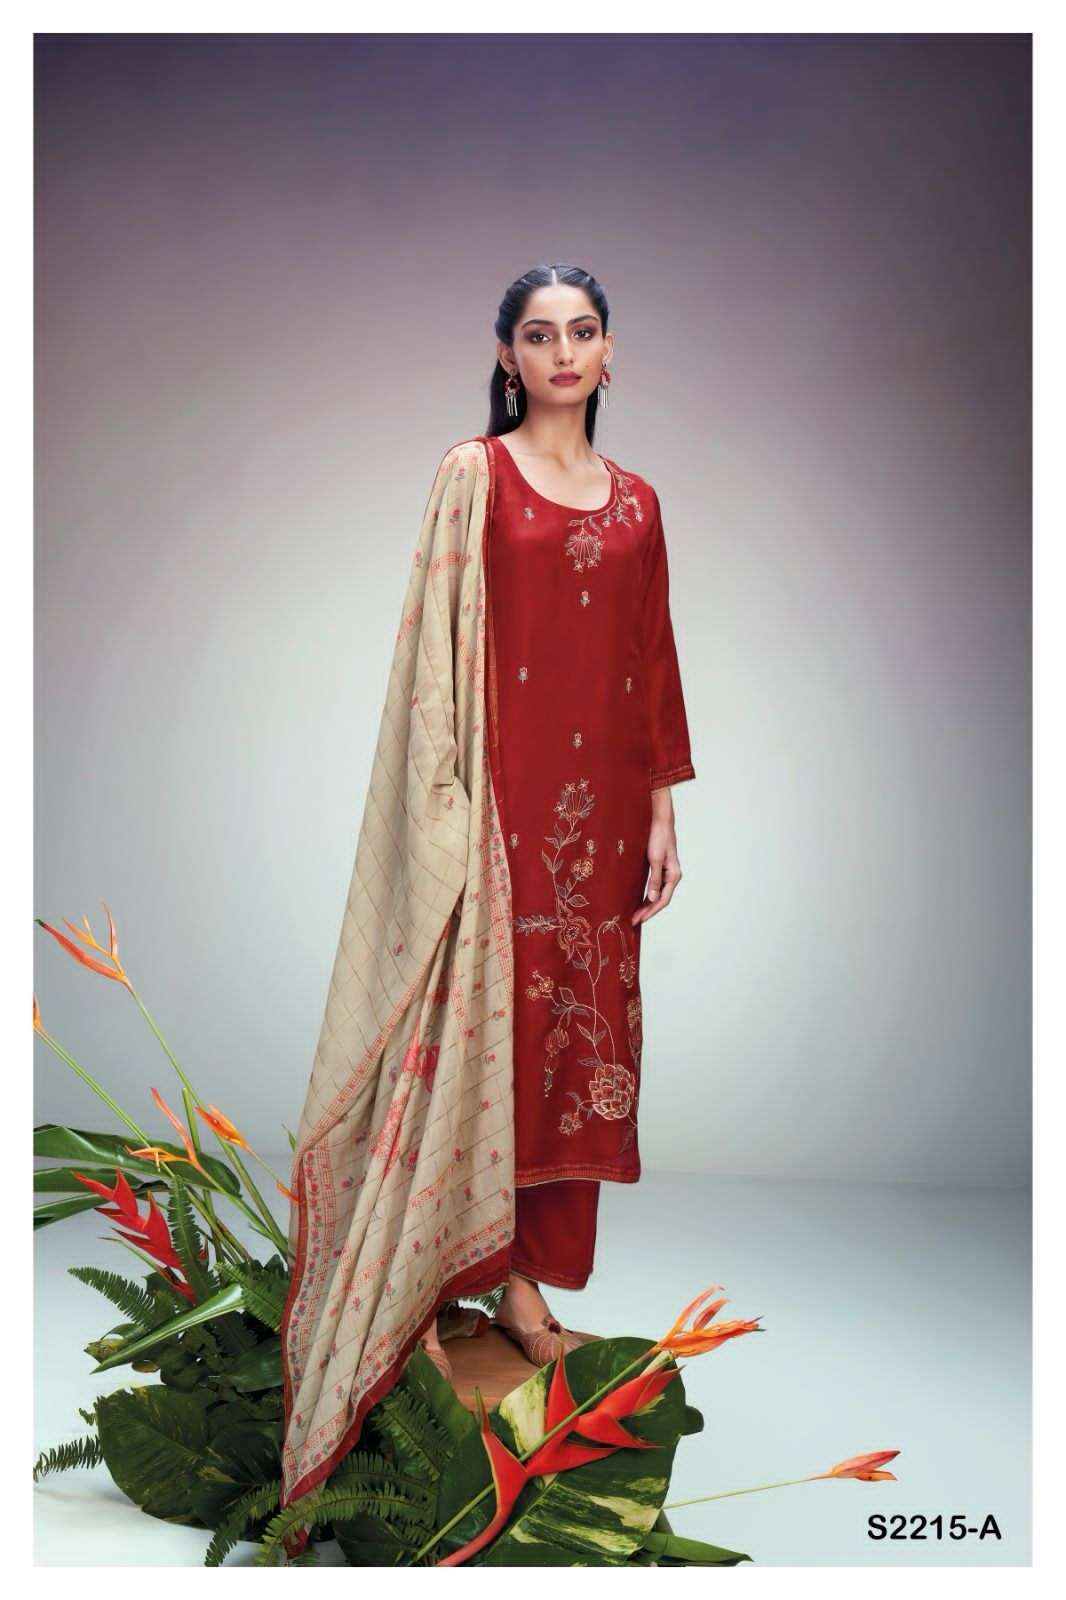 ganga genuli 2215 colour series latest designer pakistani salwar kameez wholesaler surat gujarat